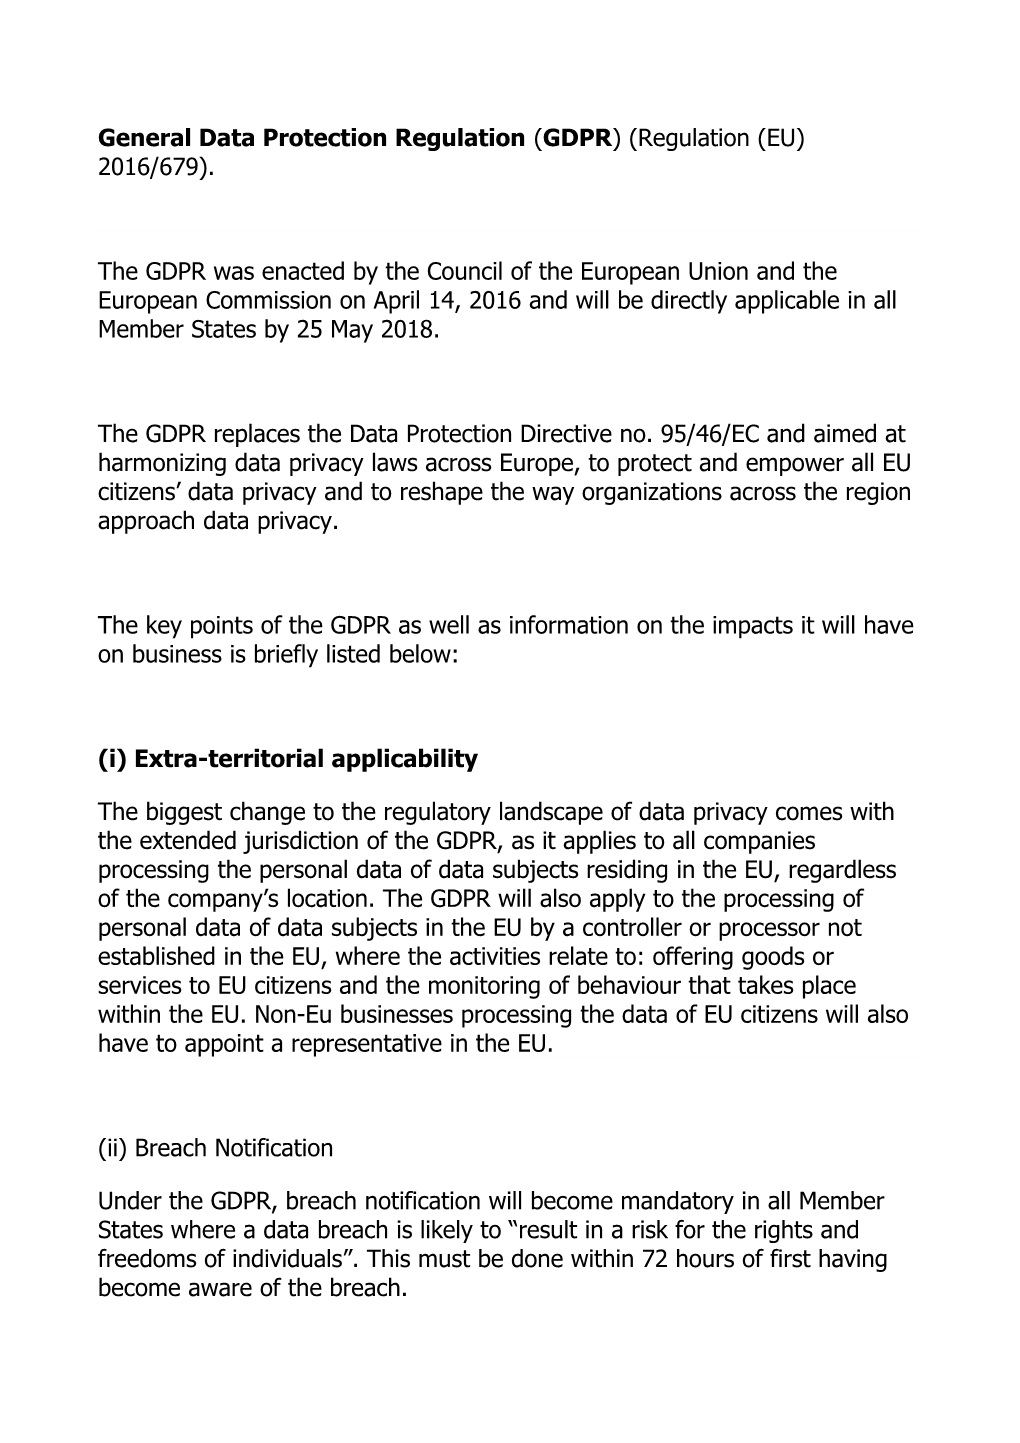 General Data Protection Regulation(GDPR ) (Regulation (EU) 2016/679)